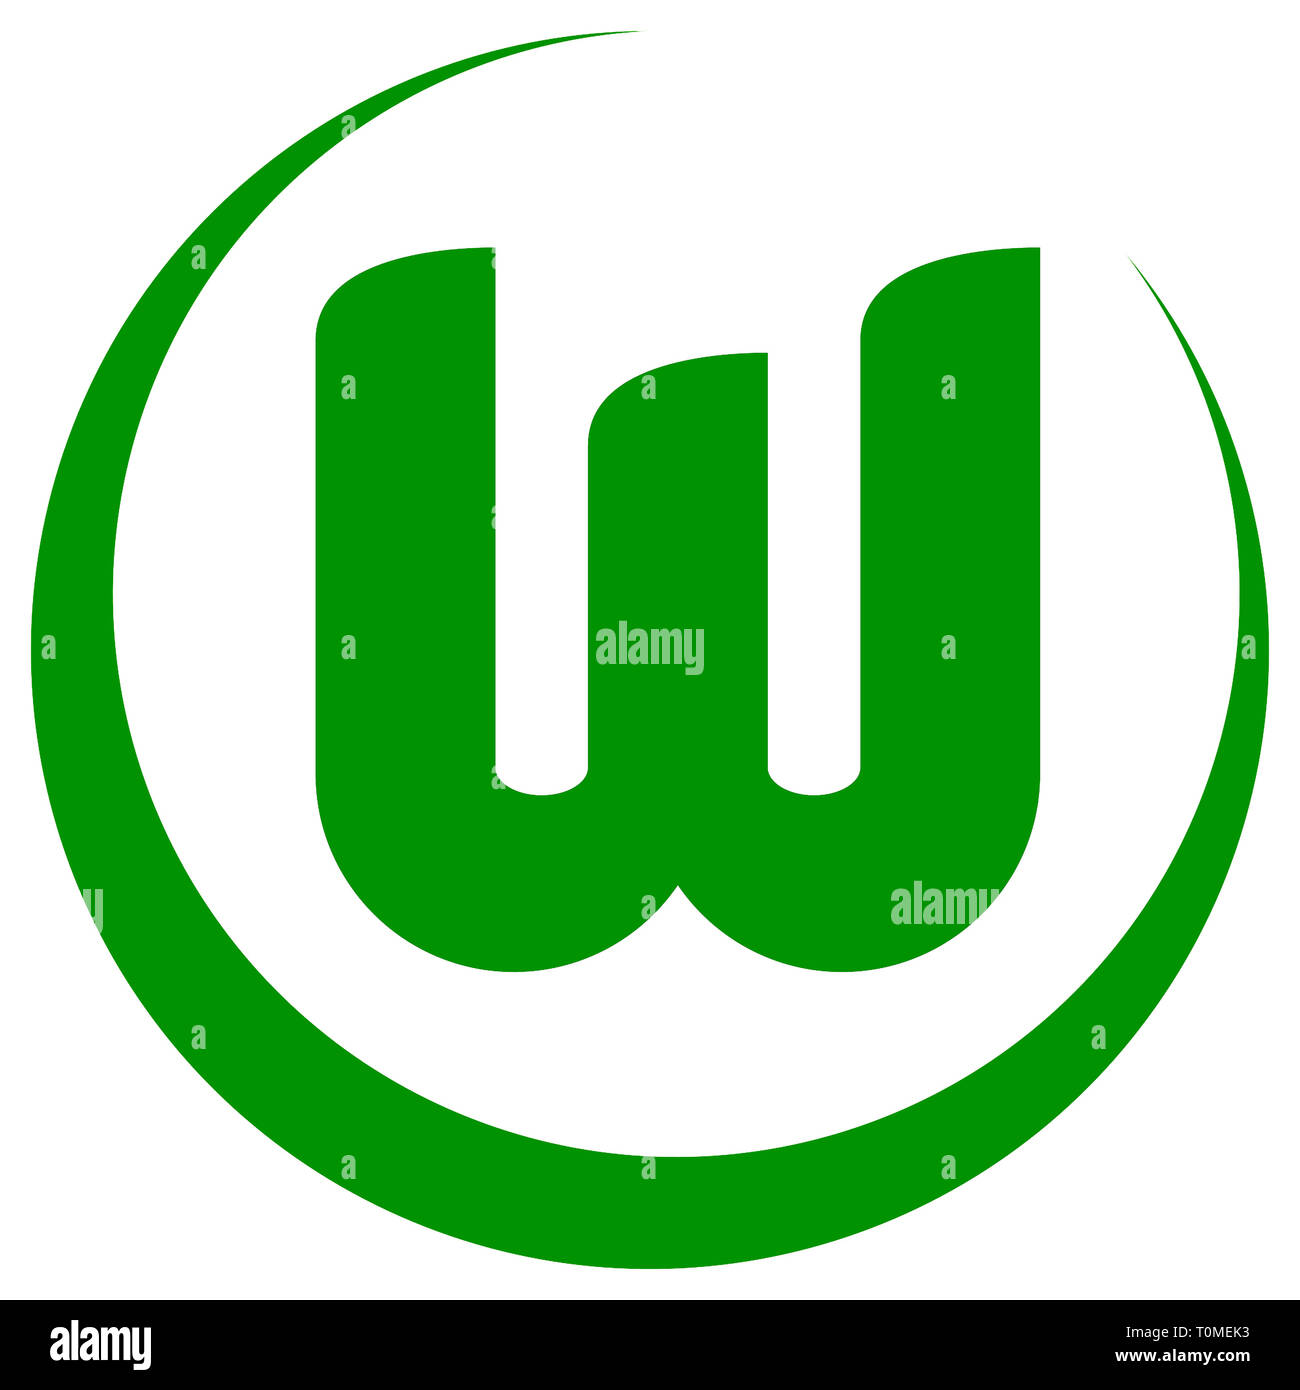 Football logo vfl wolfsburg hi-res stock photography and images - Alamy